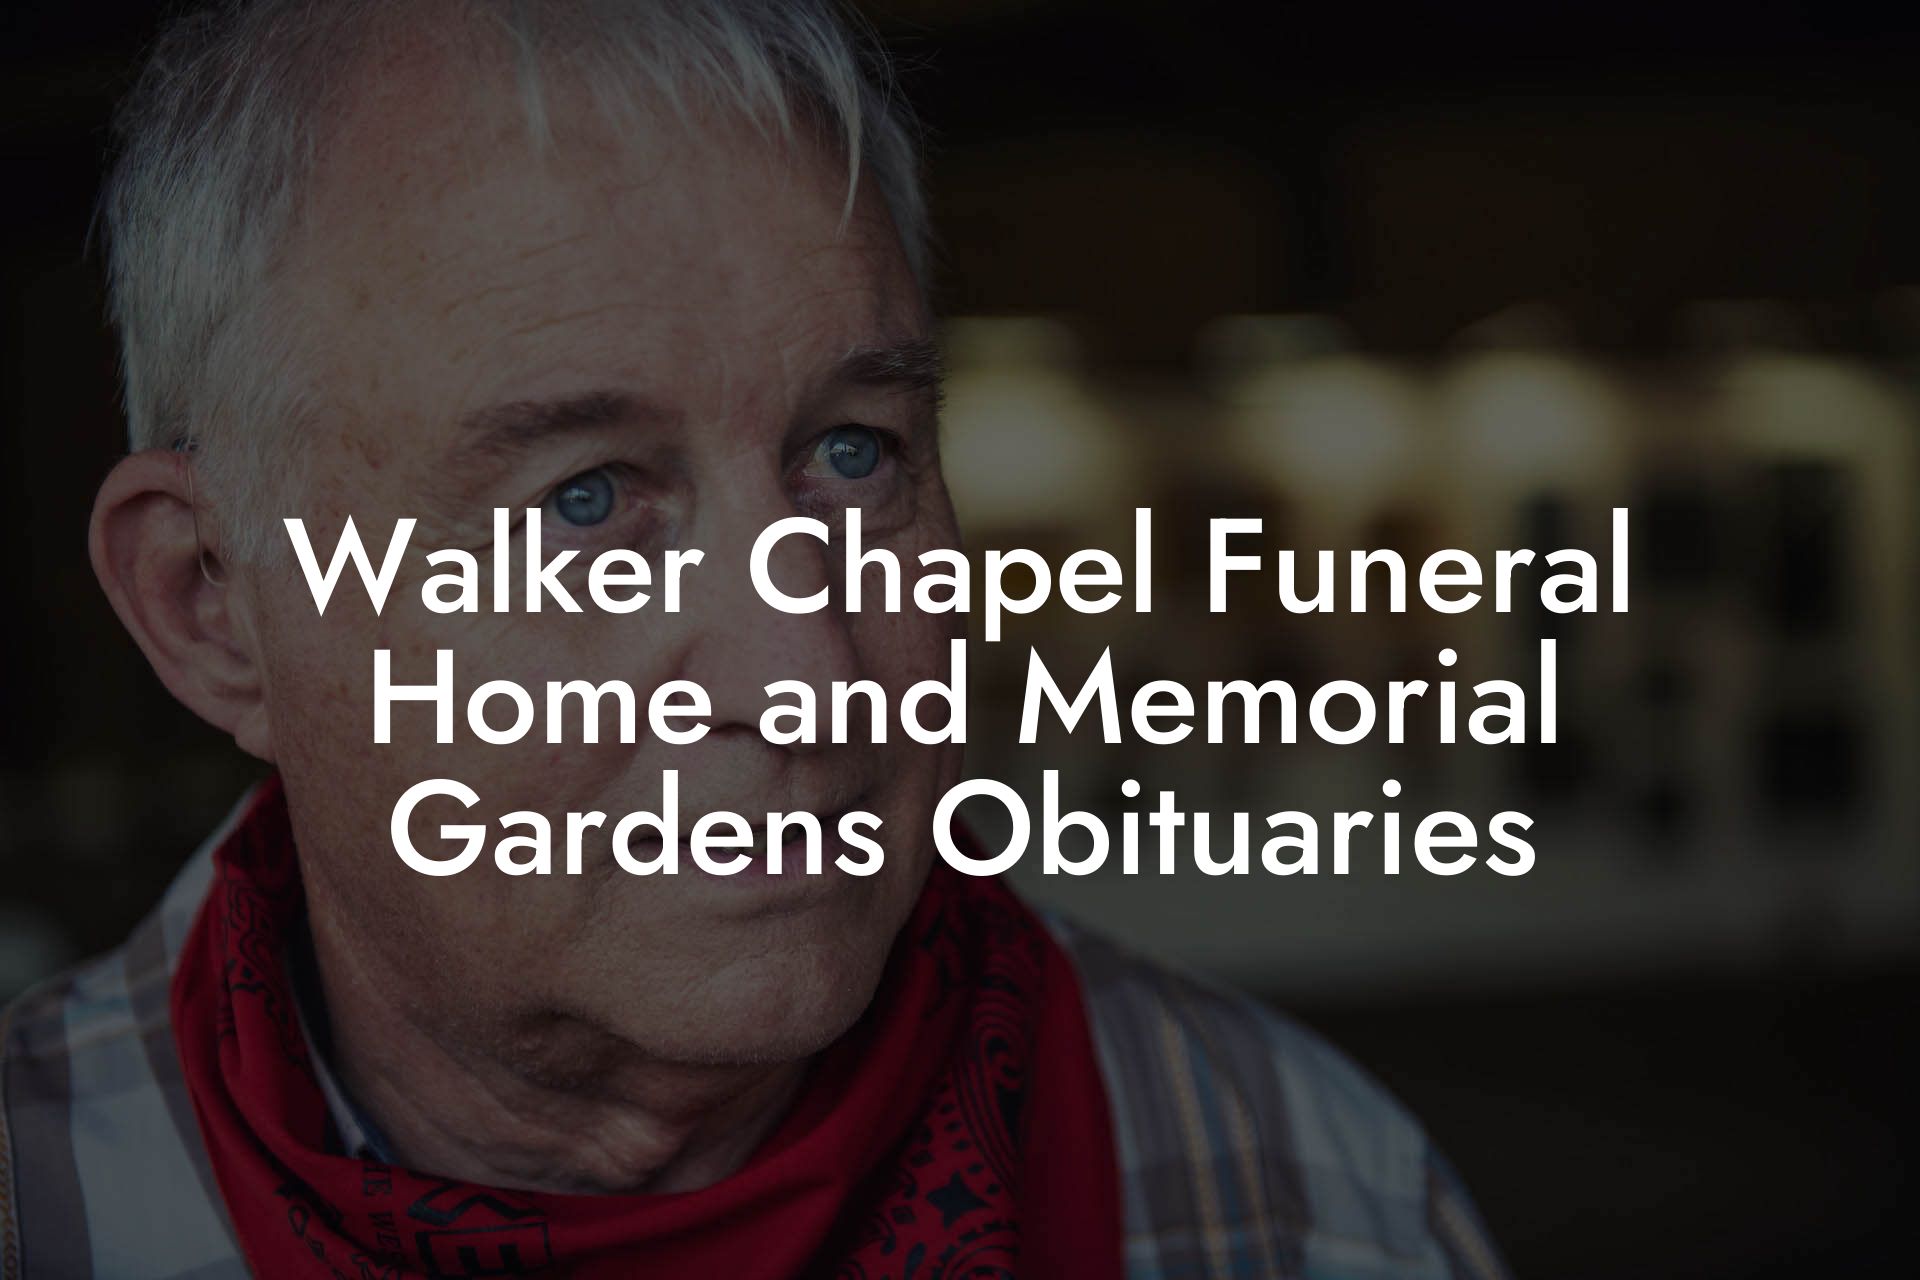 Walker Chapel Funeral Home and Memorial Gardens Obituaries